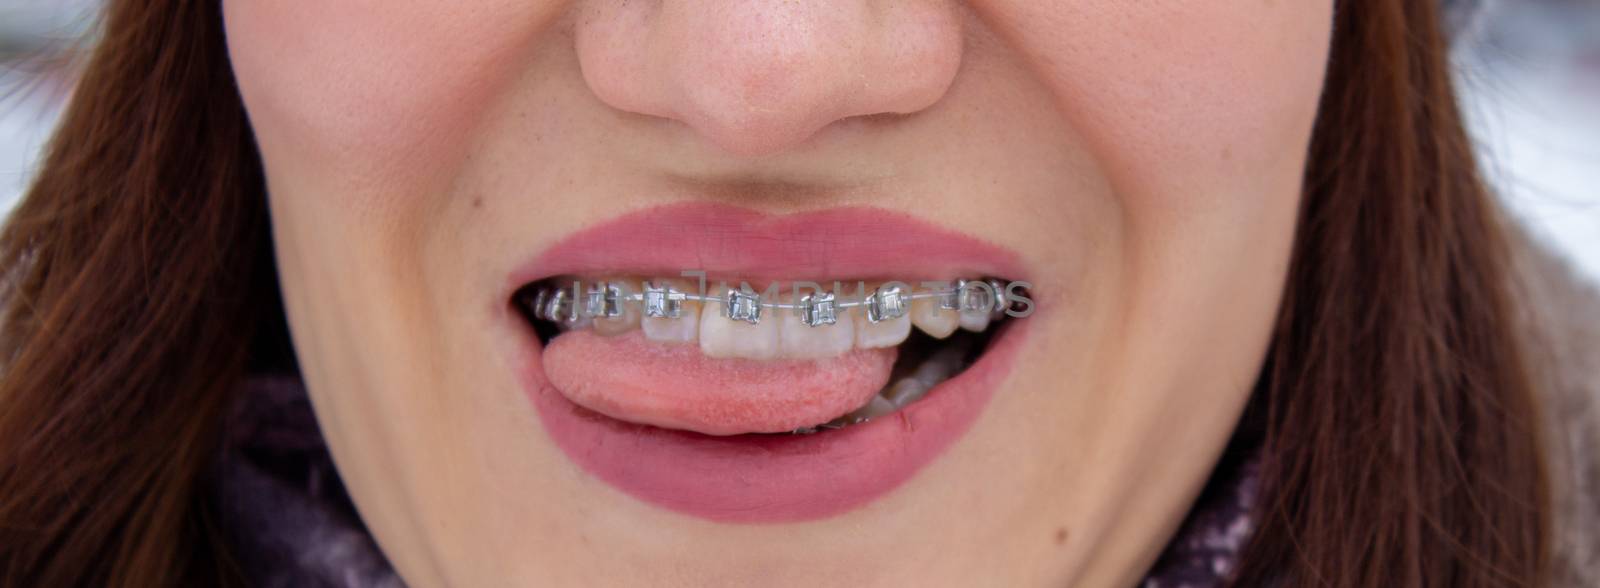 Braces on the girl's teeth smiling, macro photo teeth, close-up lips,  by AnatoliiFoto